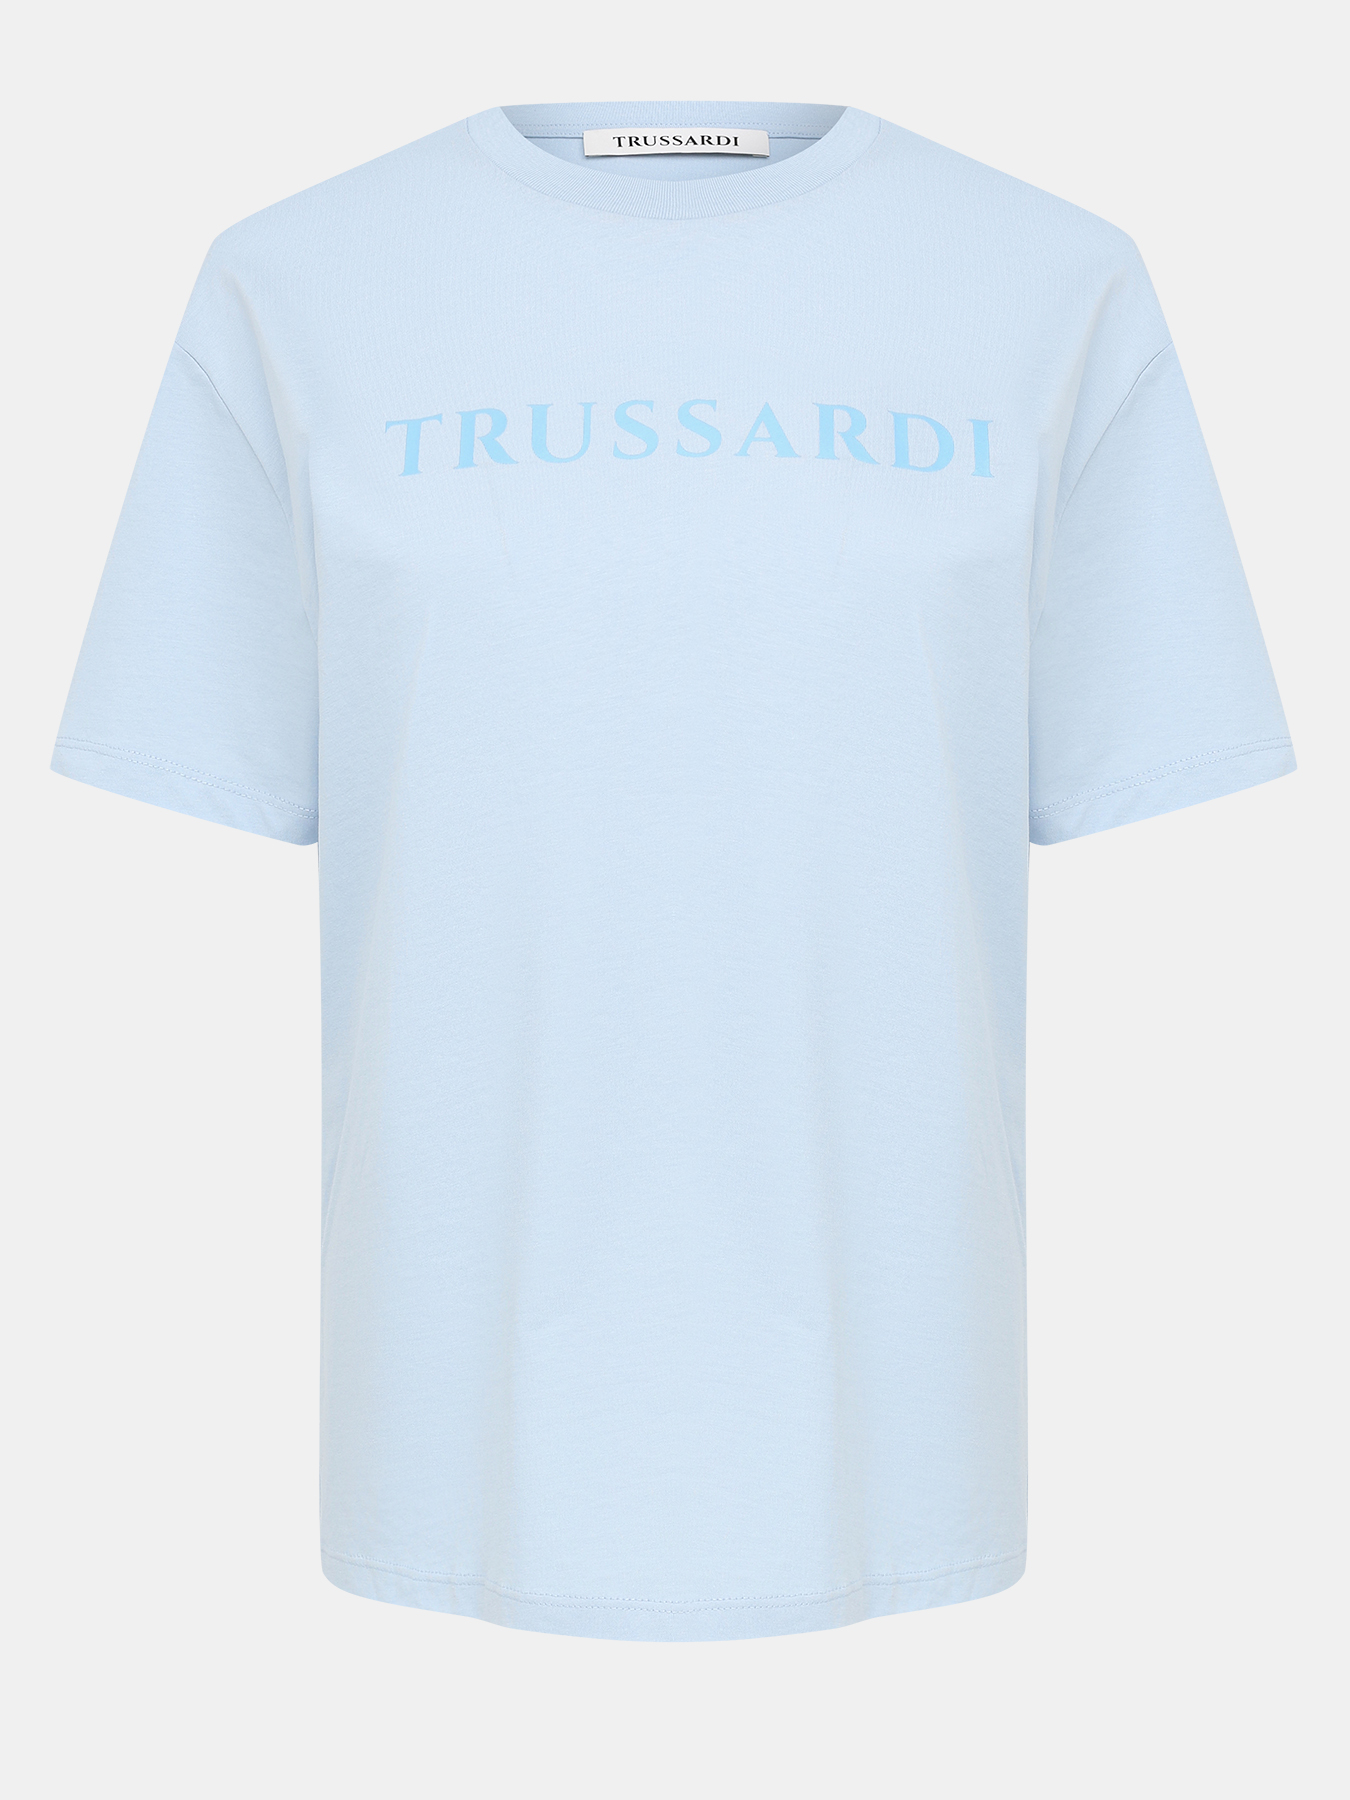 Футболка Trussardi 435514-041, цвет голубой, размер 40-42 - фото 1